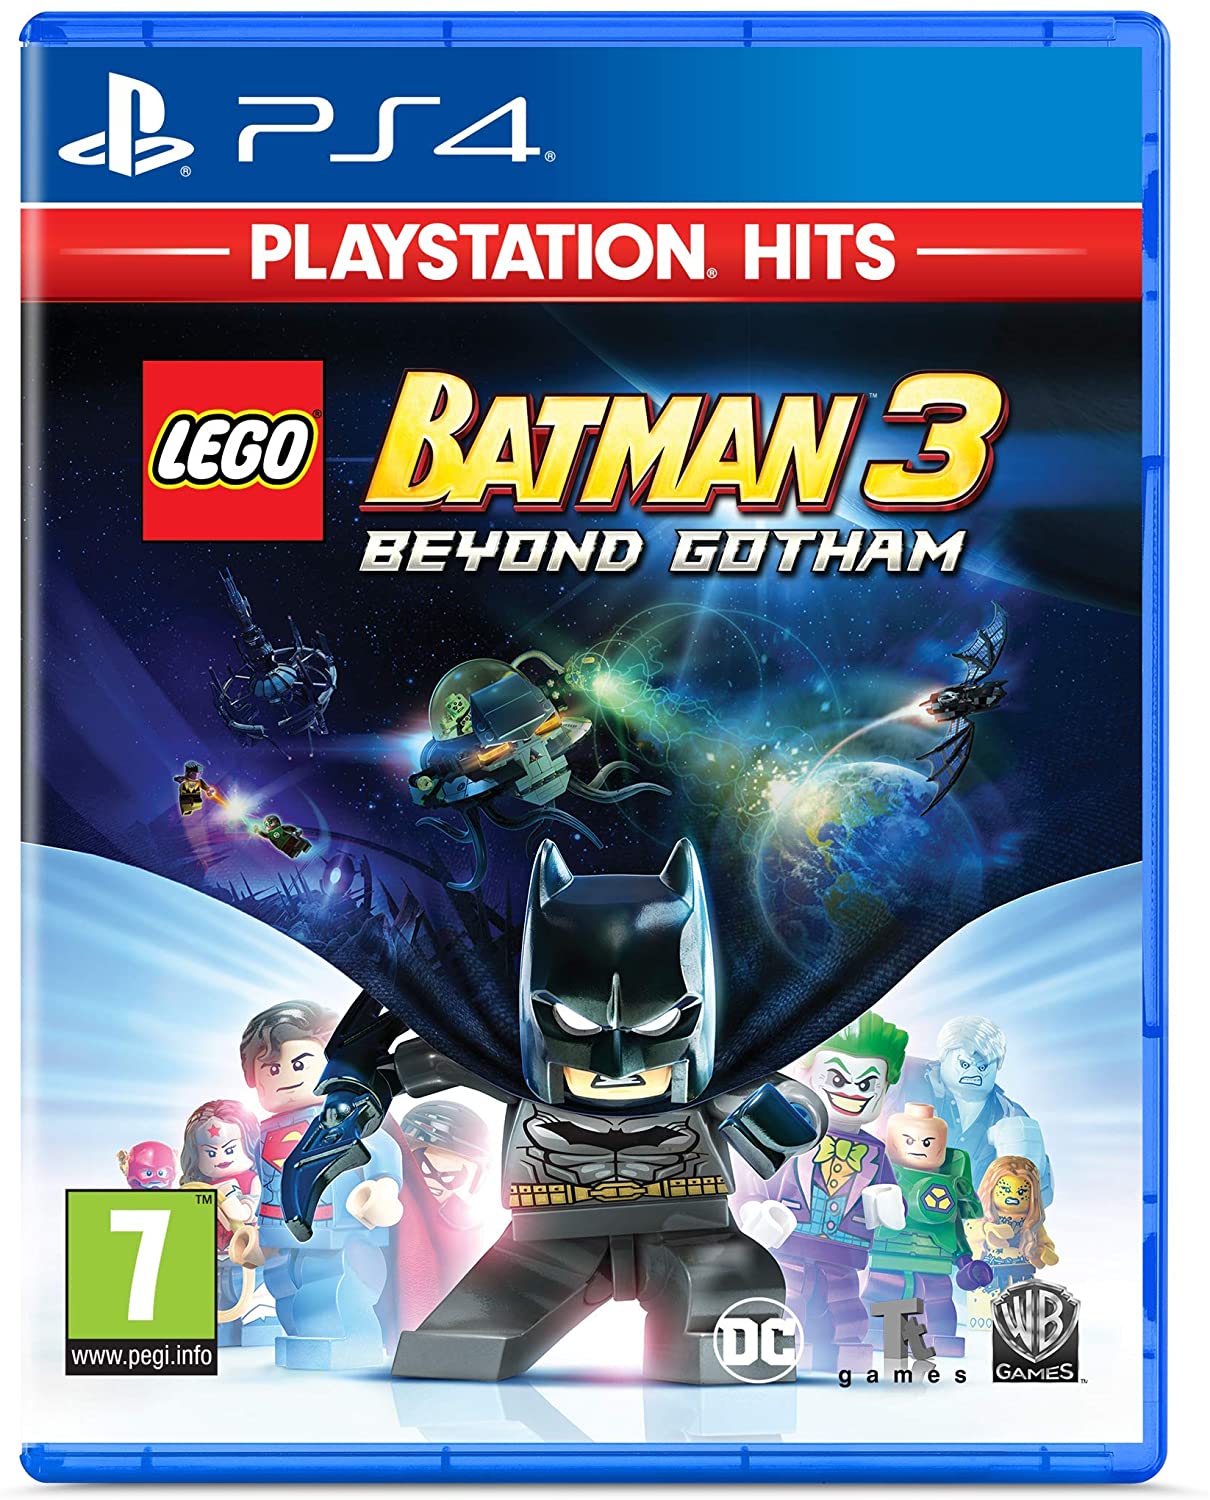 LEGO Batman 3: Beyond Gotham Video Game - PlayStation Hits (PS4)